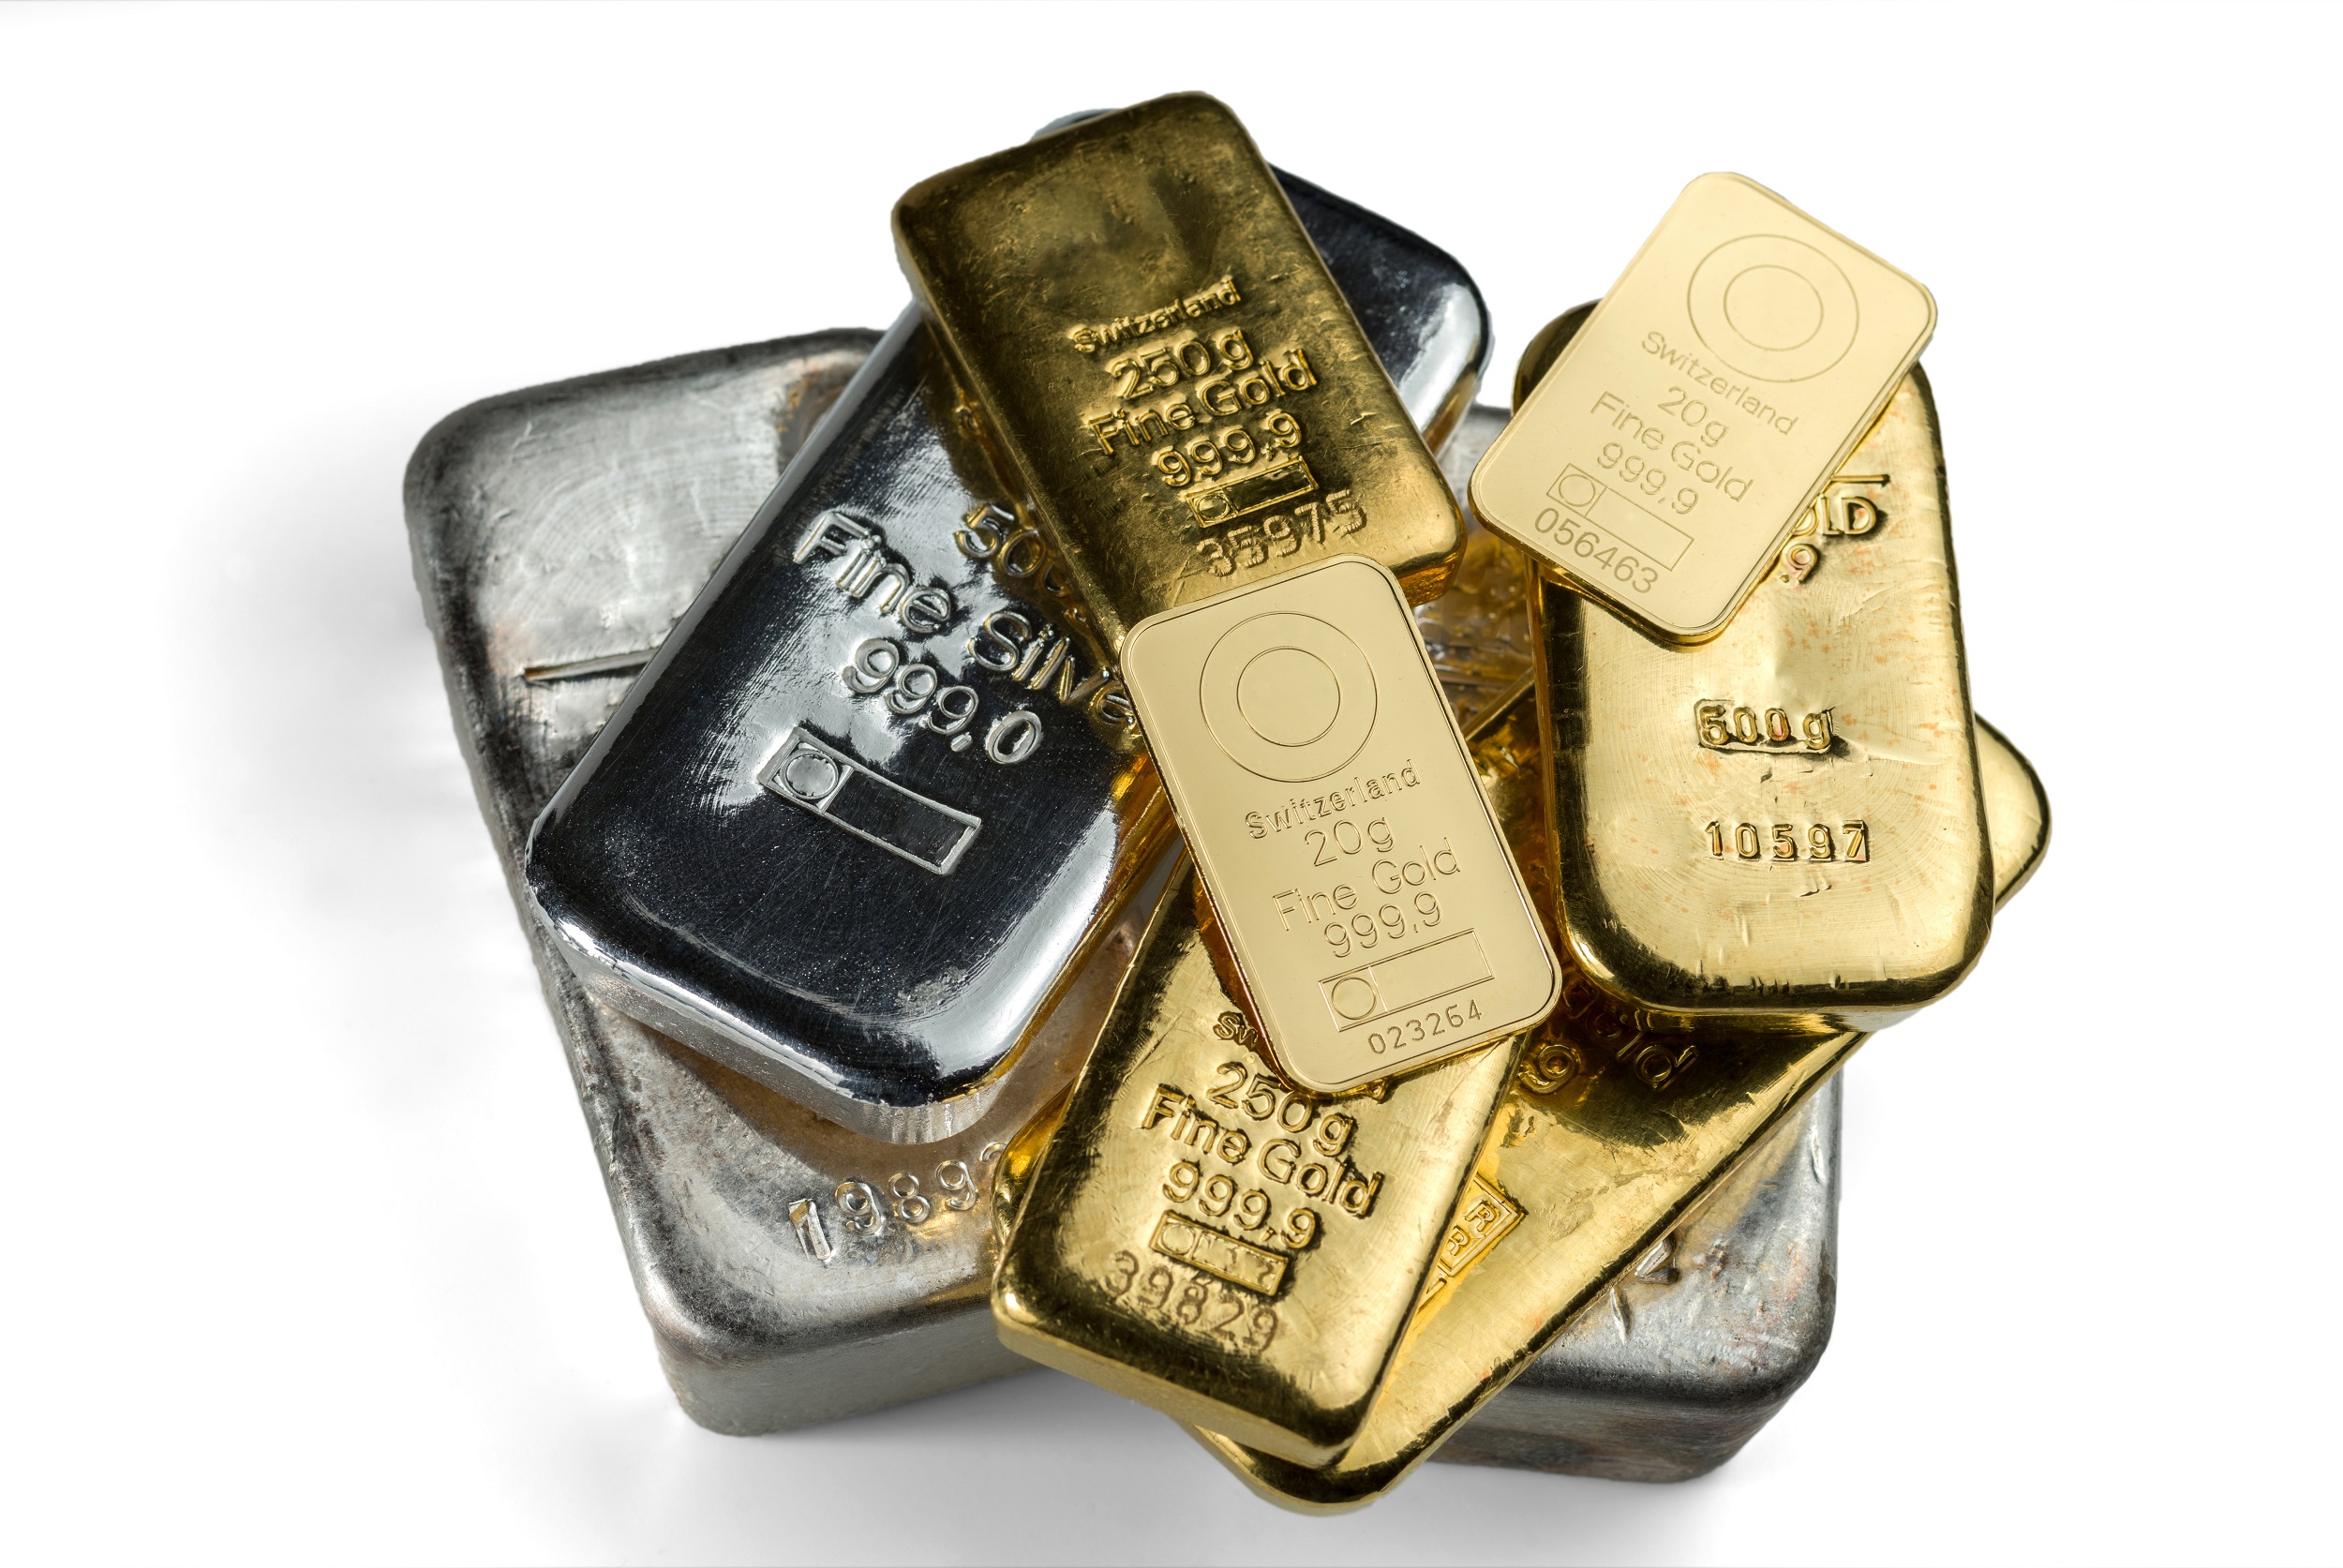 Various precious metal bars made of gold and silver.